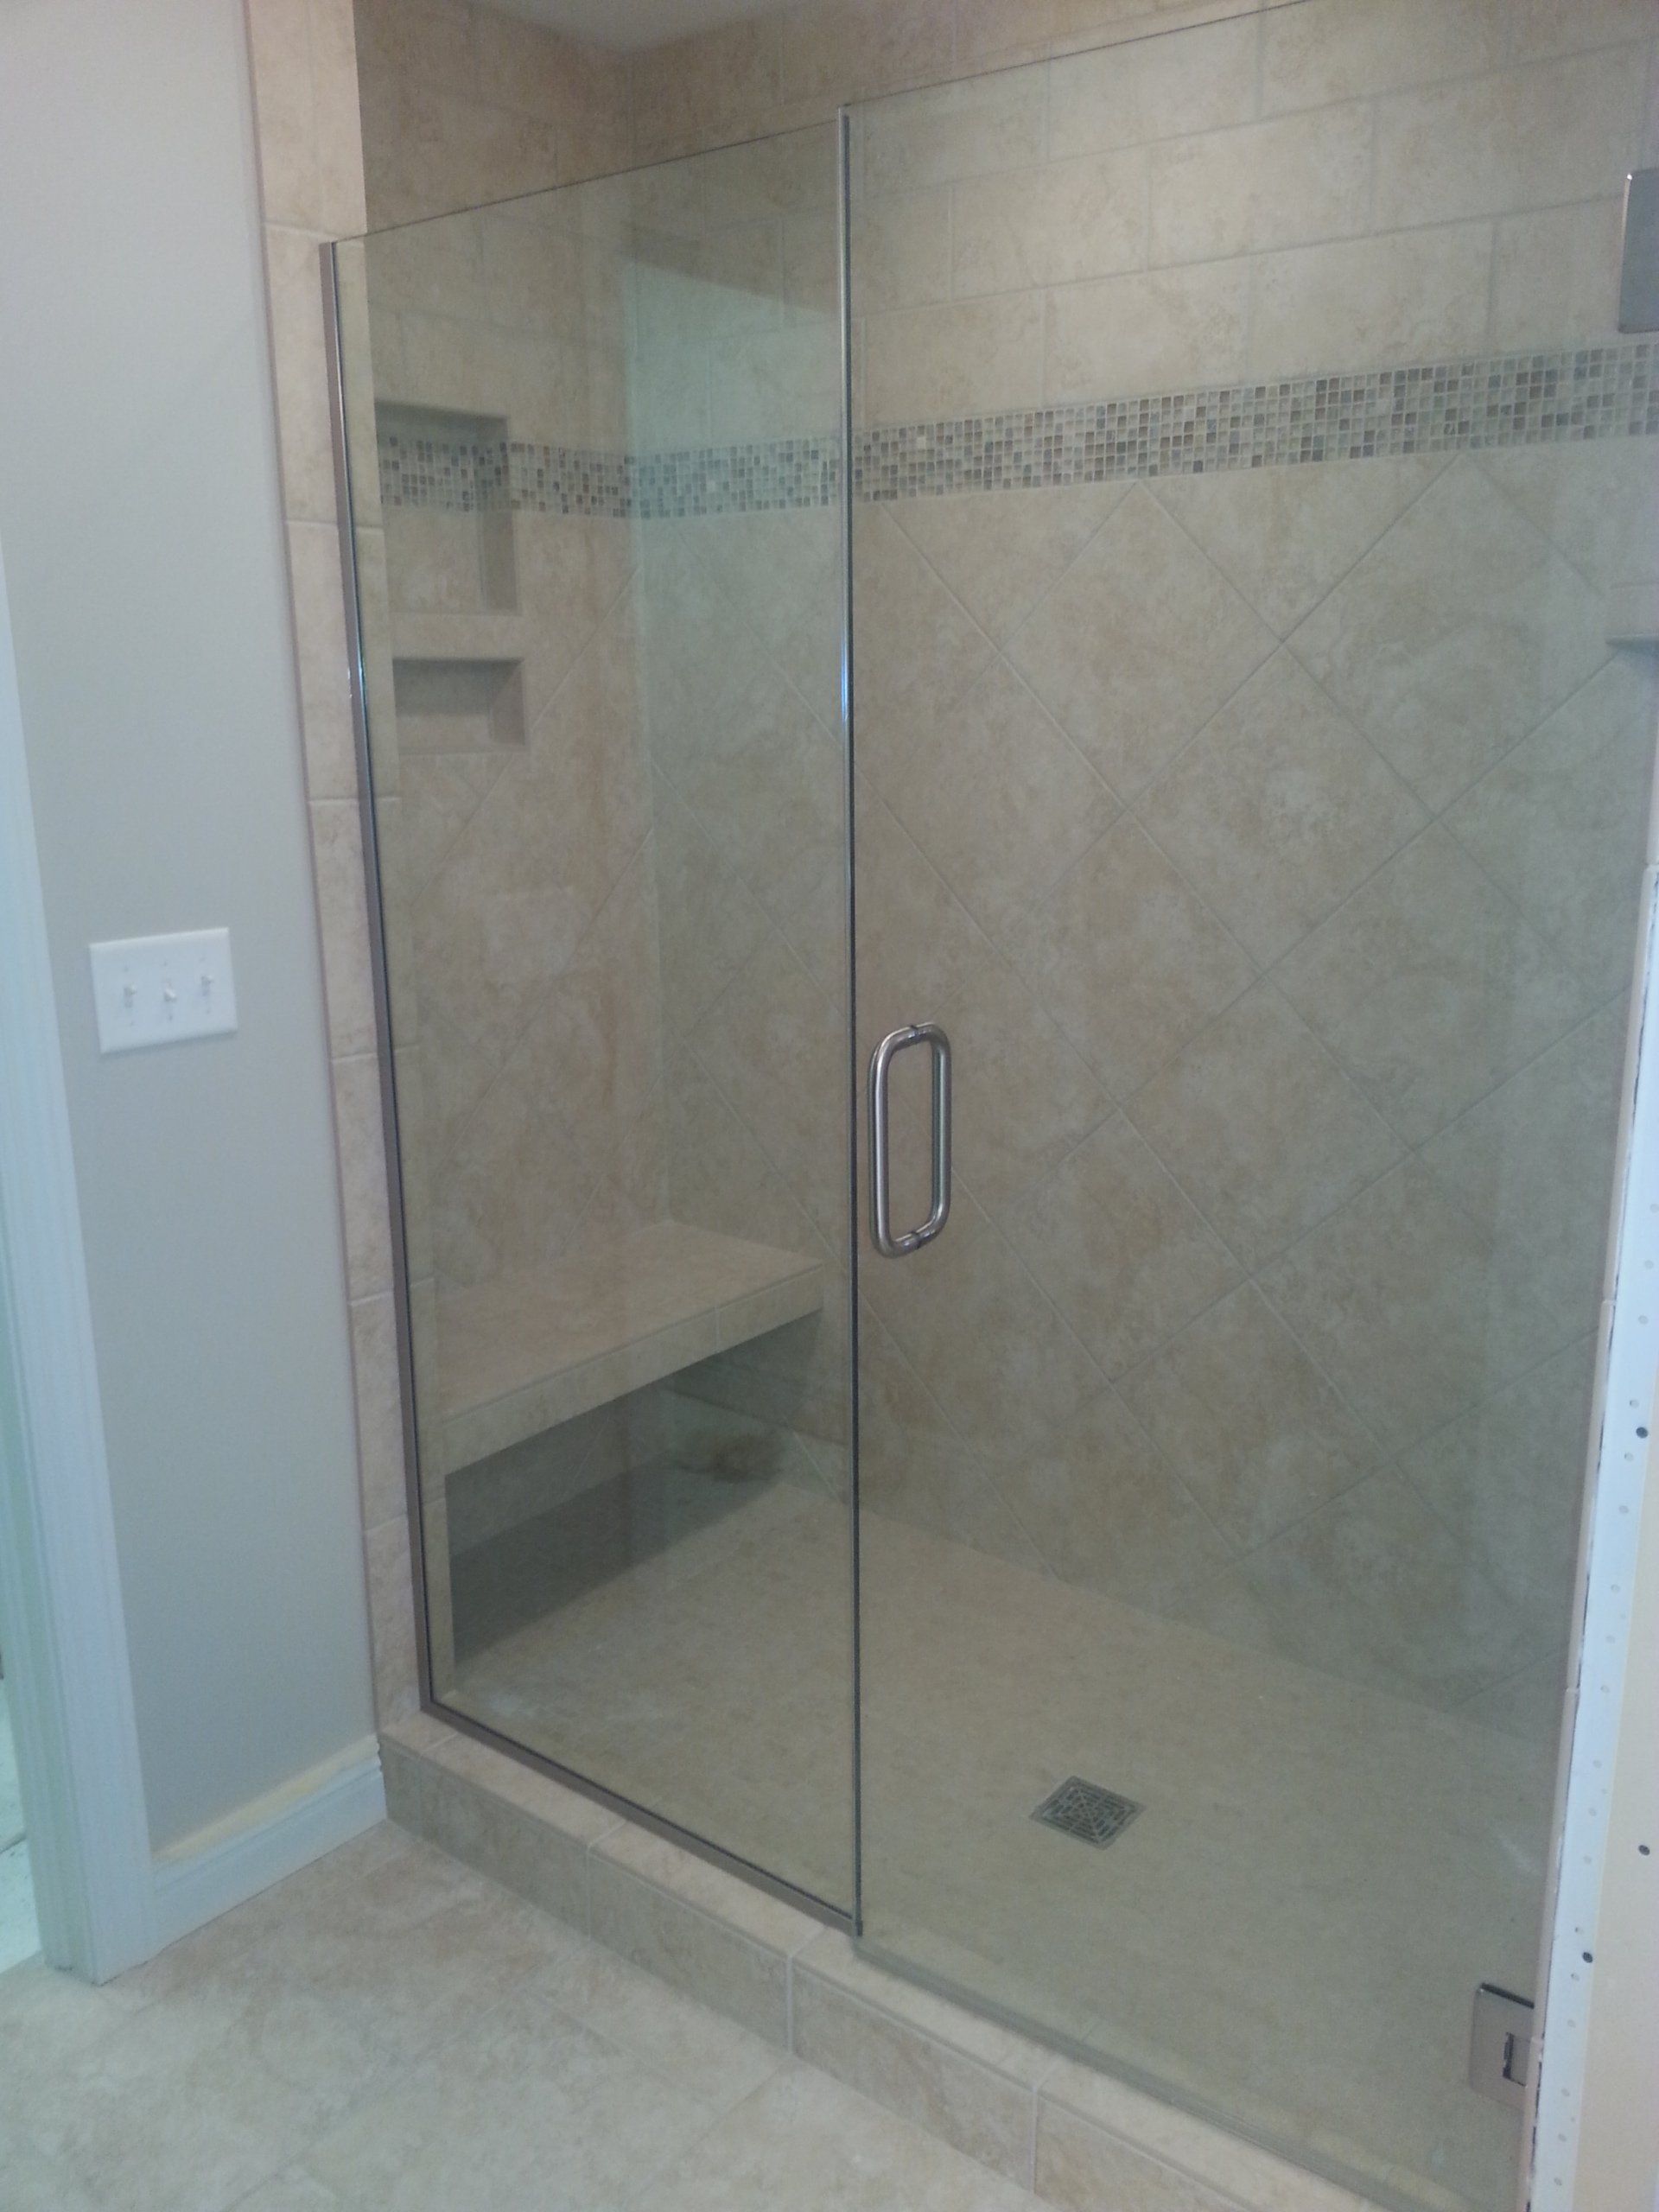 Bathroom with glass door — Closet Design & Remodeling in Erie, PA